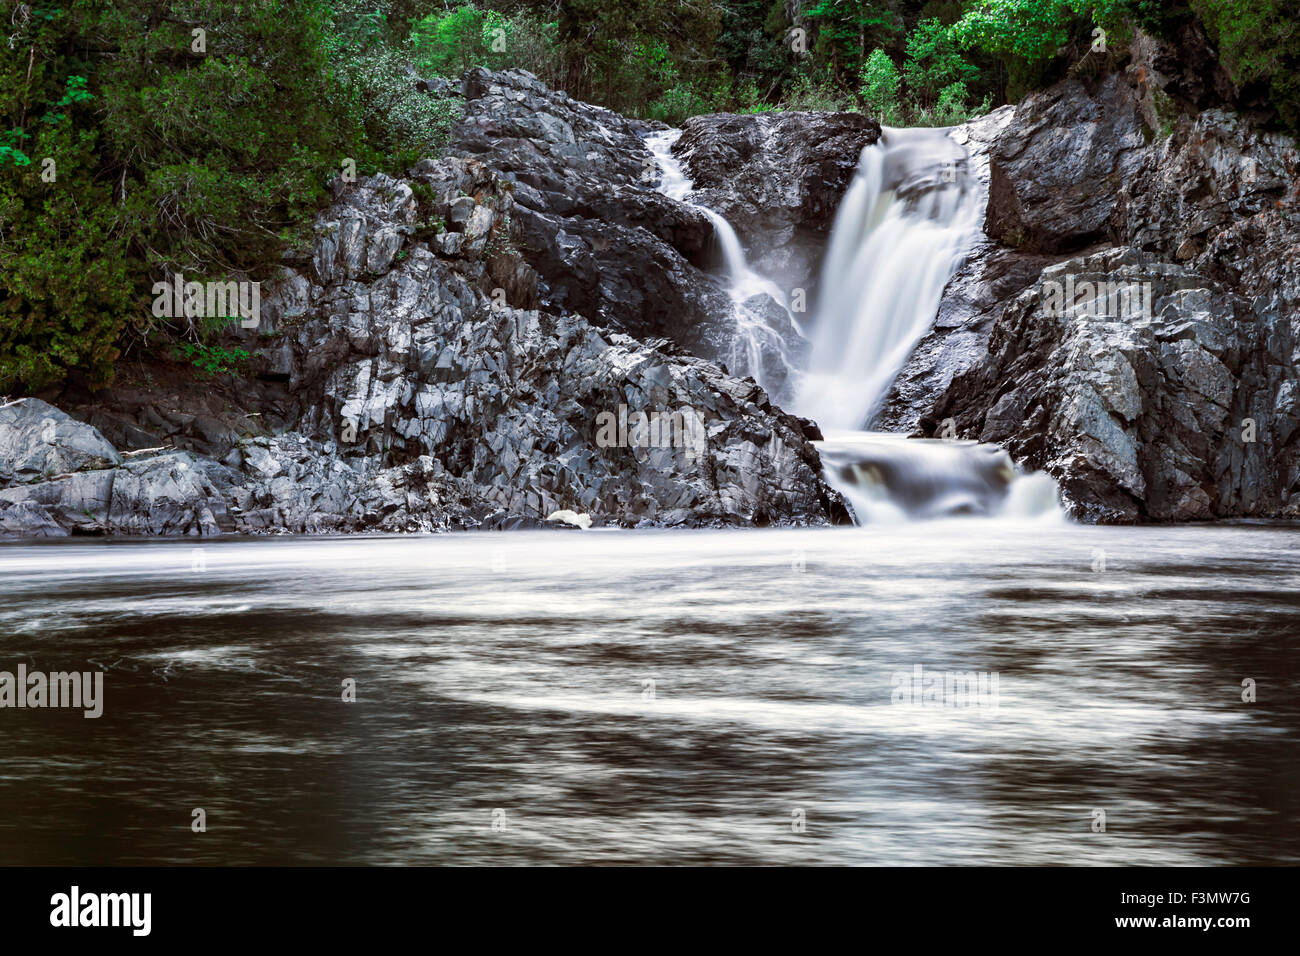 Dam fed, Silver Falls in Thunder Bay. Stock Photo